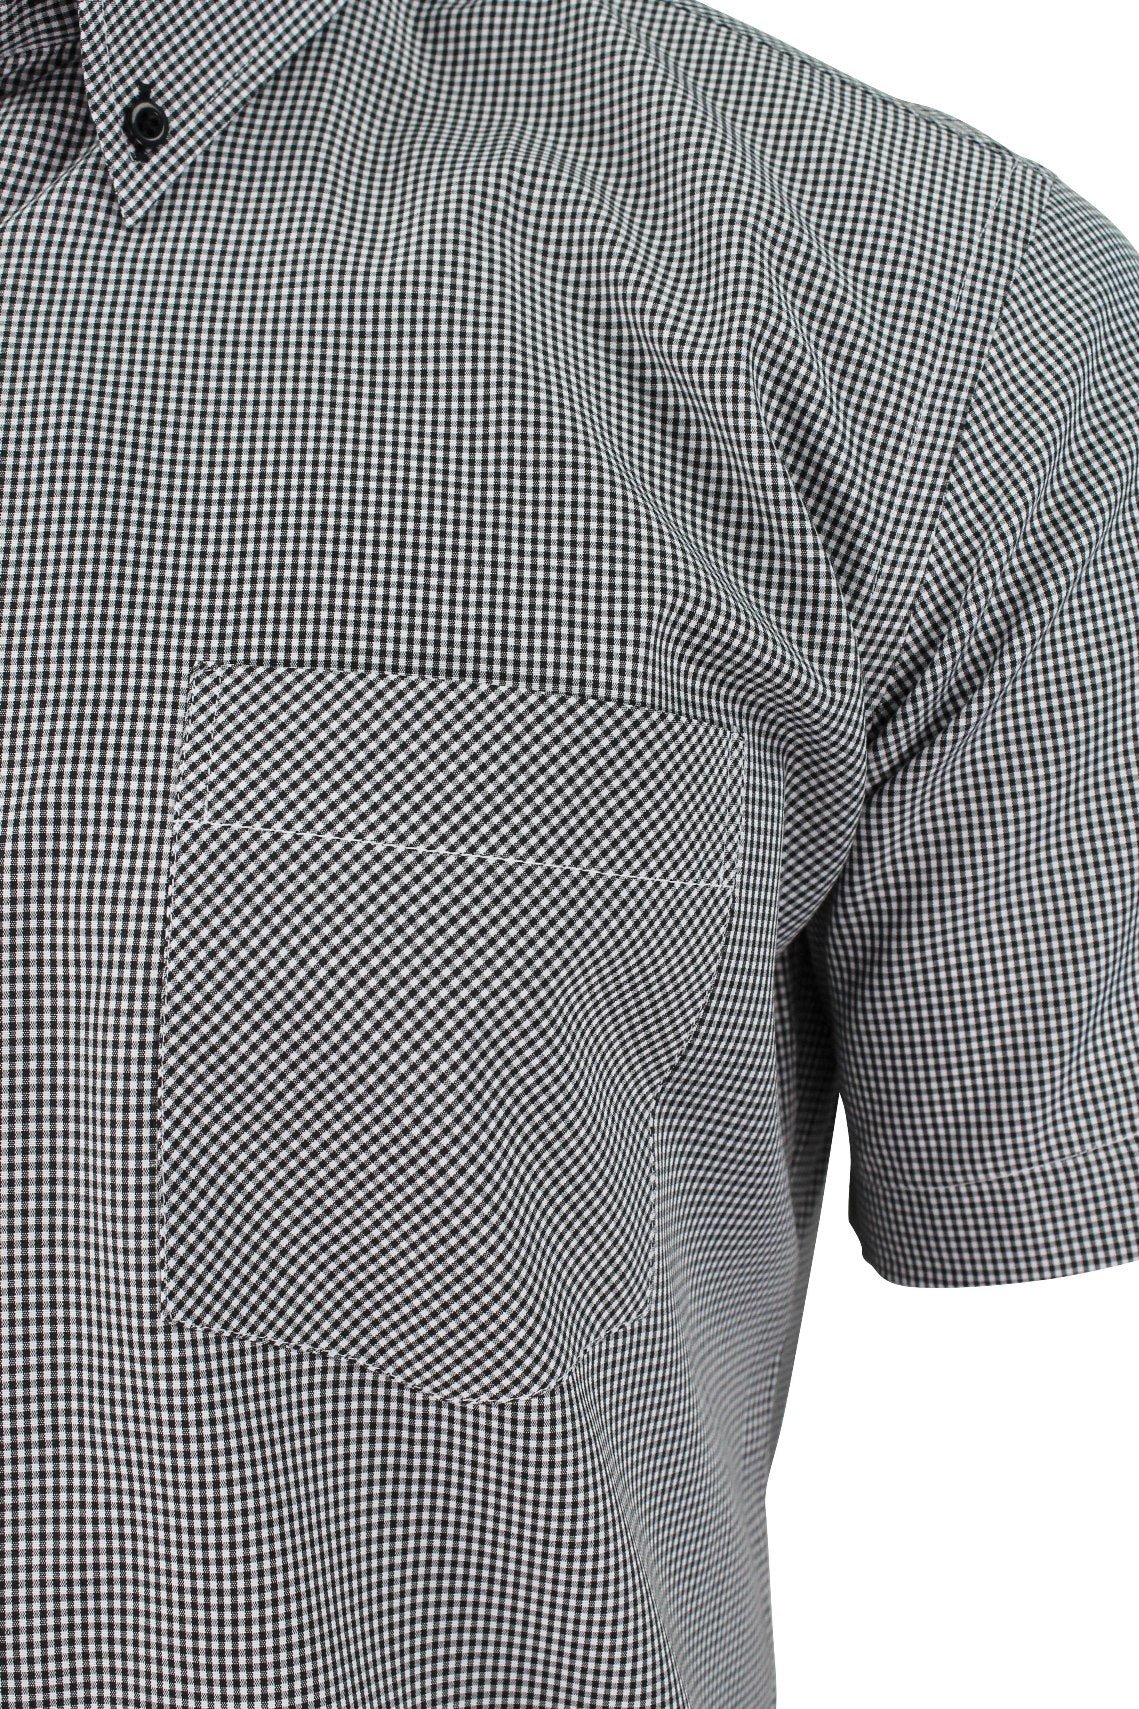 Mens Short Sleeved Shirt by Xact Clothing Micro Gingham Check, 02, 1510114, Black